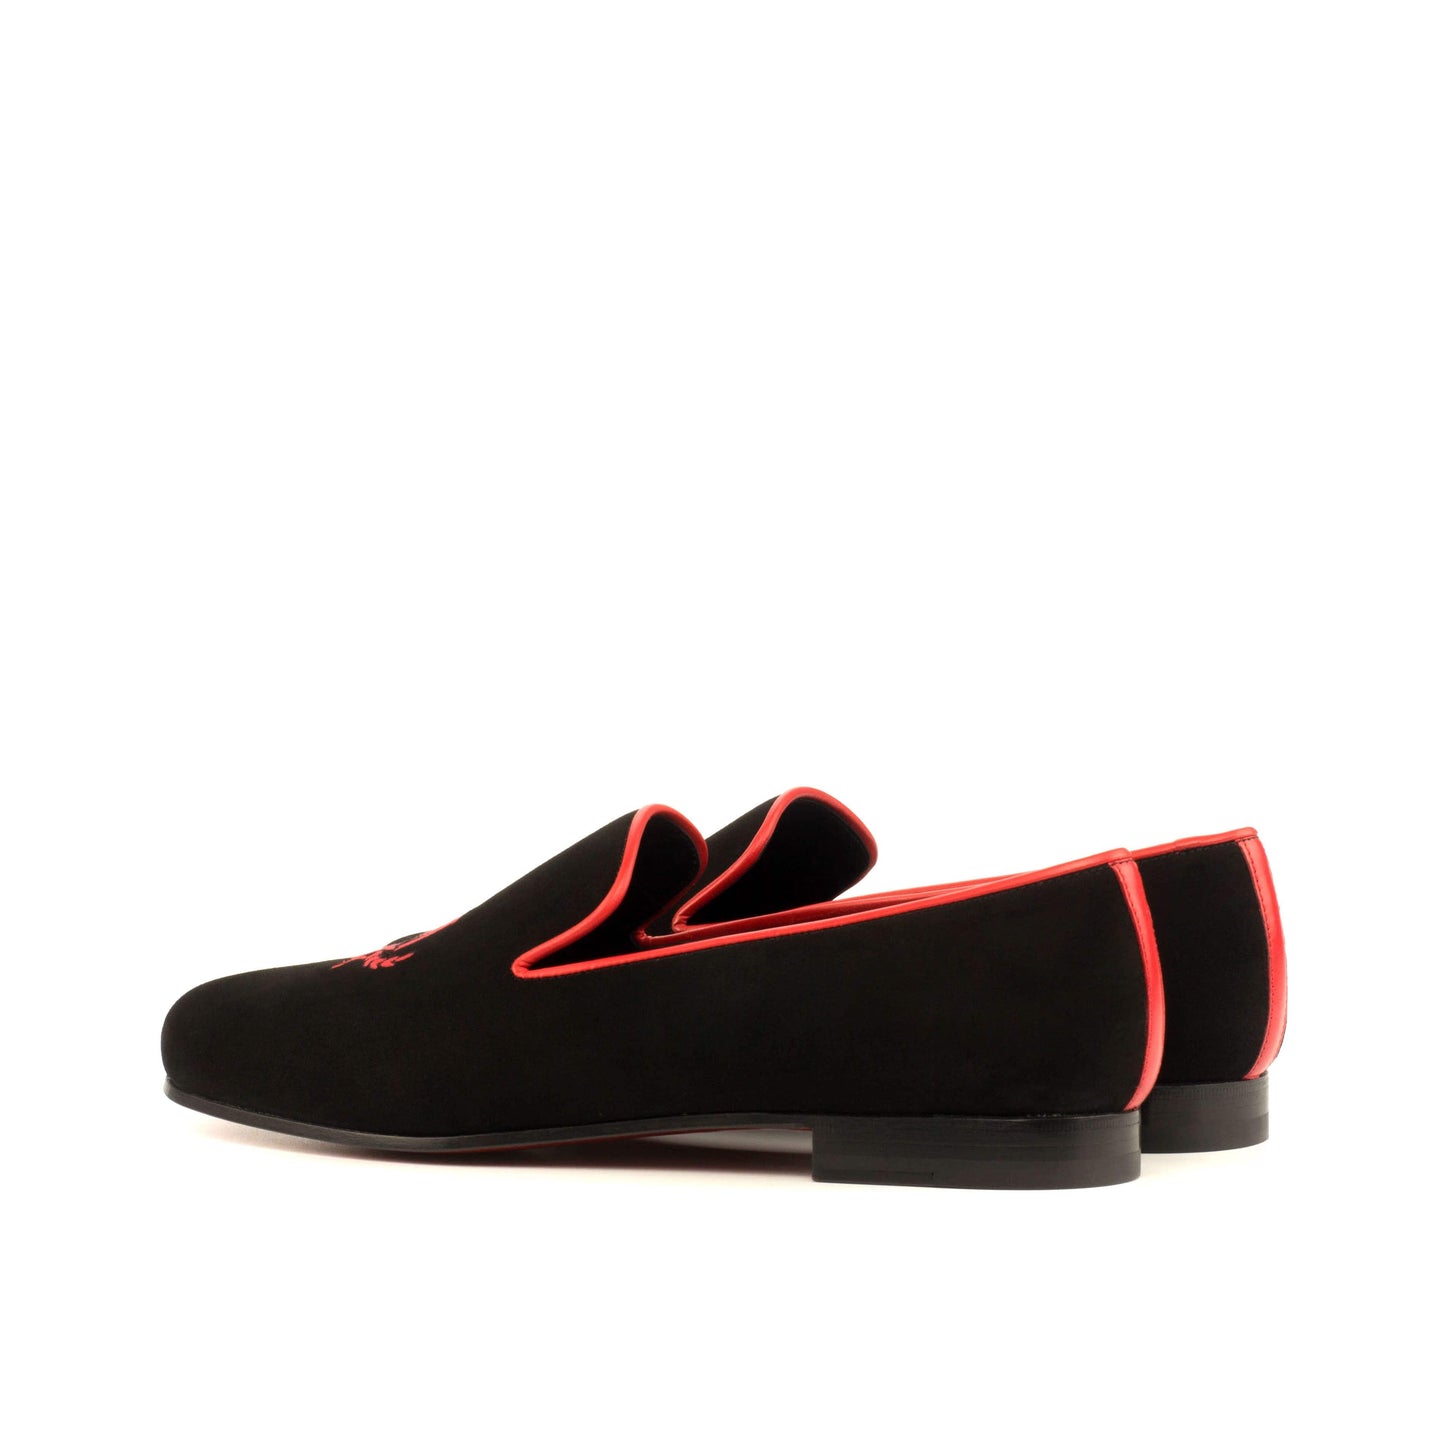 
                  
                    Amir - Mandeaux Tuxedo Slippers Shoes Black Suede Red Trim Black Owned Anchorage Alaska
                  
                